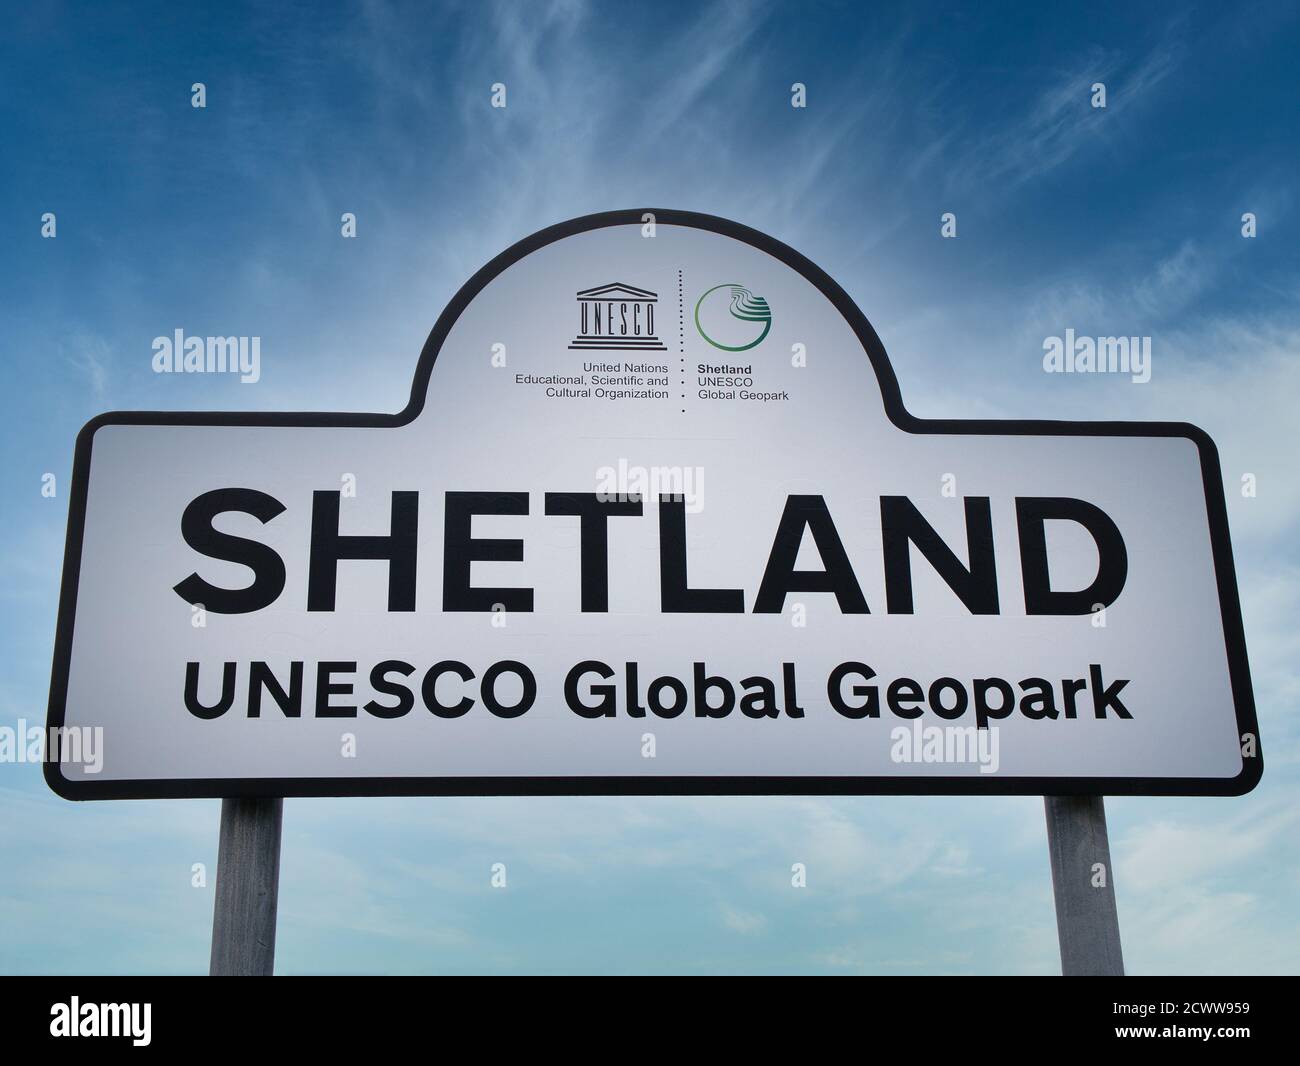 The Shetland UNESCO Global Geopark sign at the Holmsgarth Ferry Terminal in Lerwick, Shetland, Scotland, UK Stock Photo